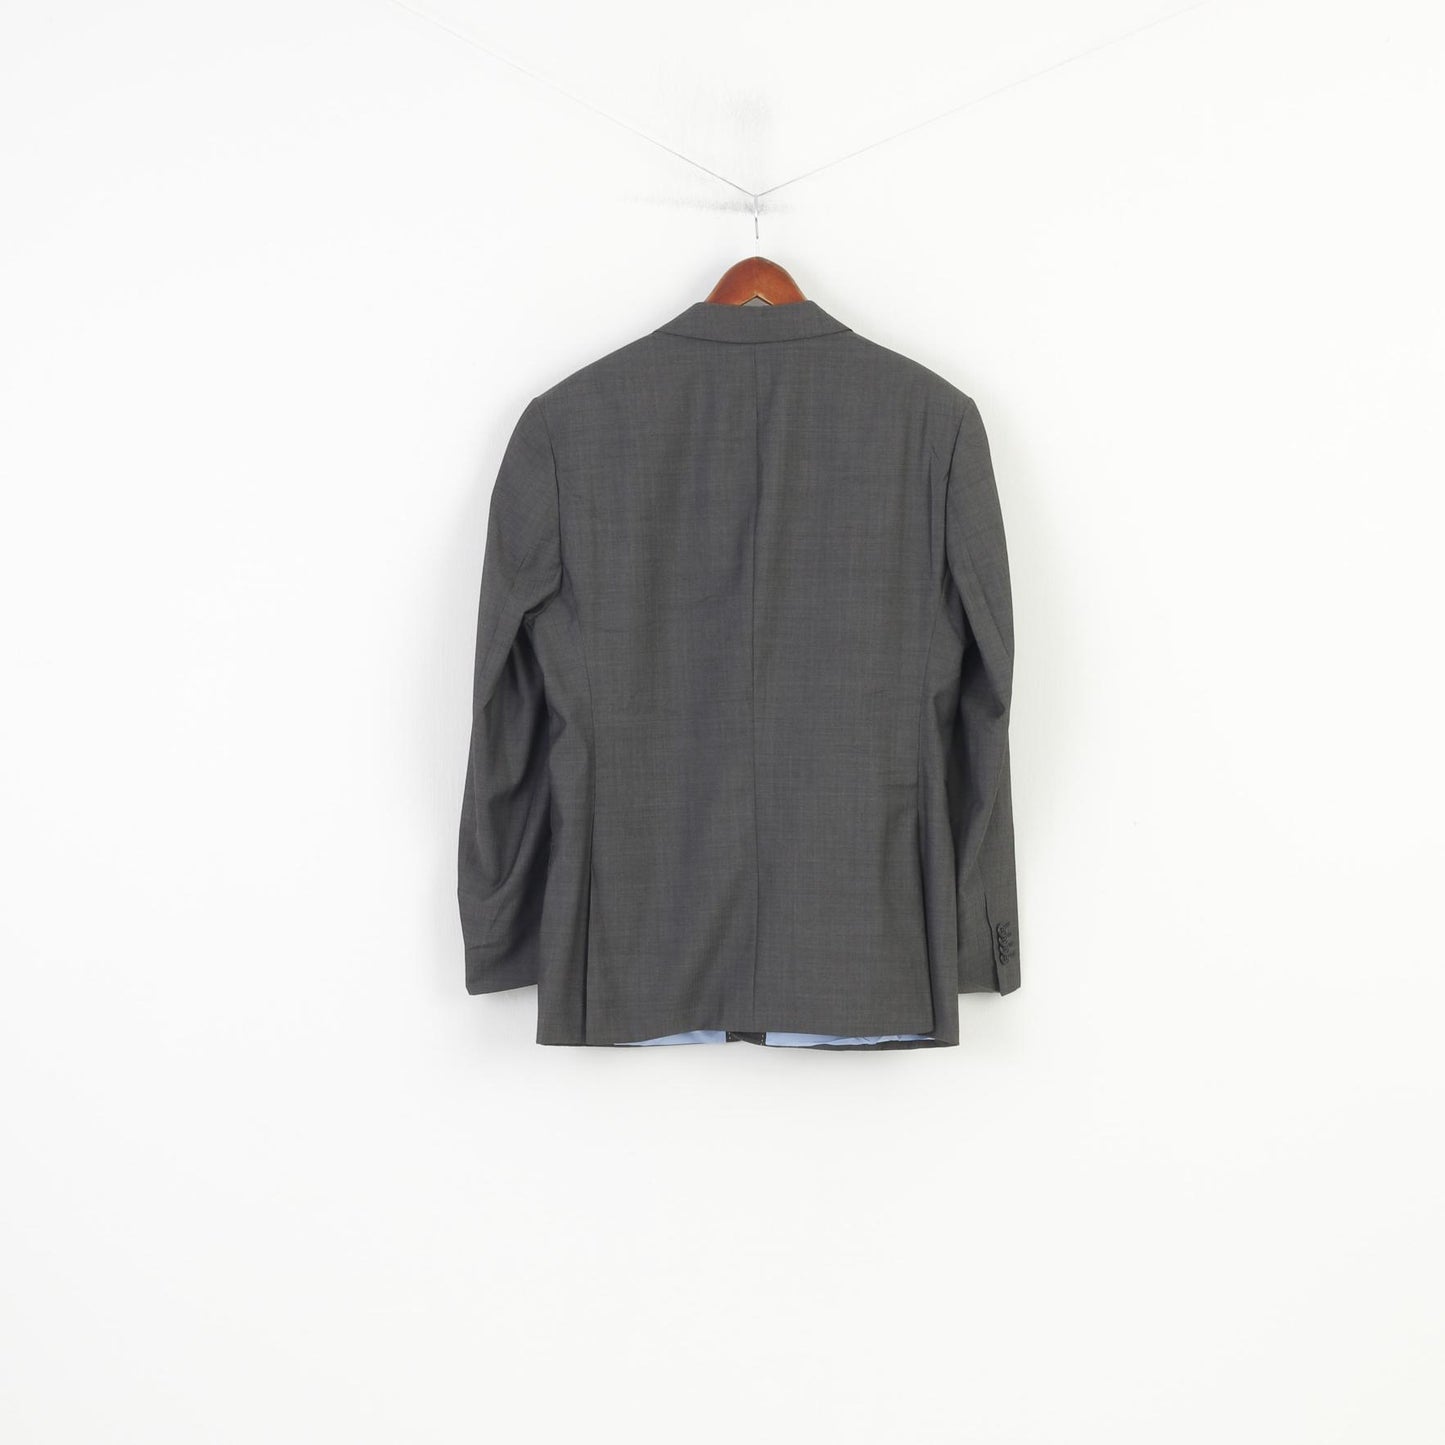 Daniel Hechter Fine Tailoring Men 44 Blazer Giacca vintage monopetto in misto lana grigia